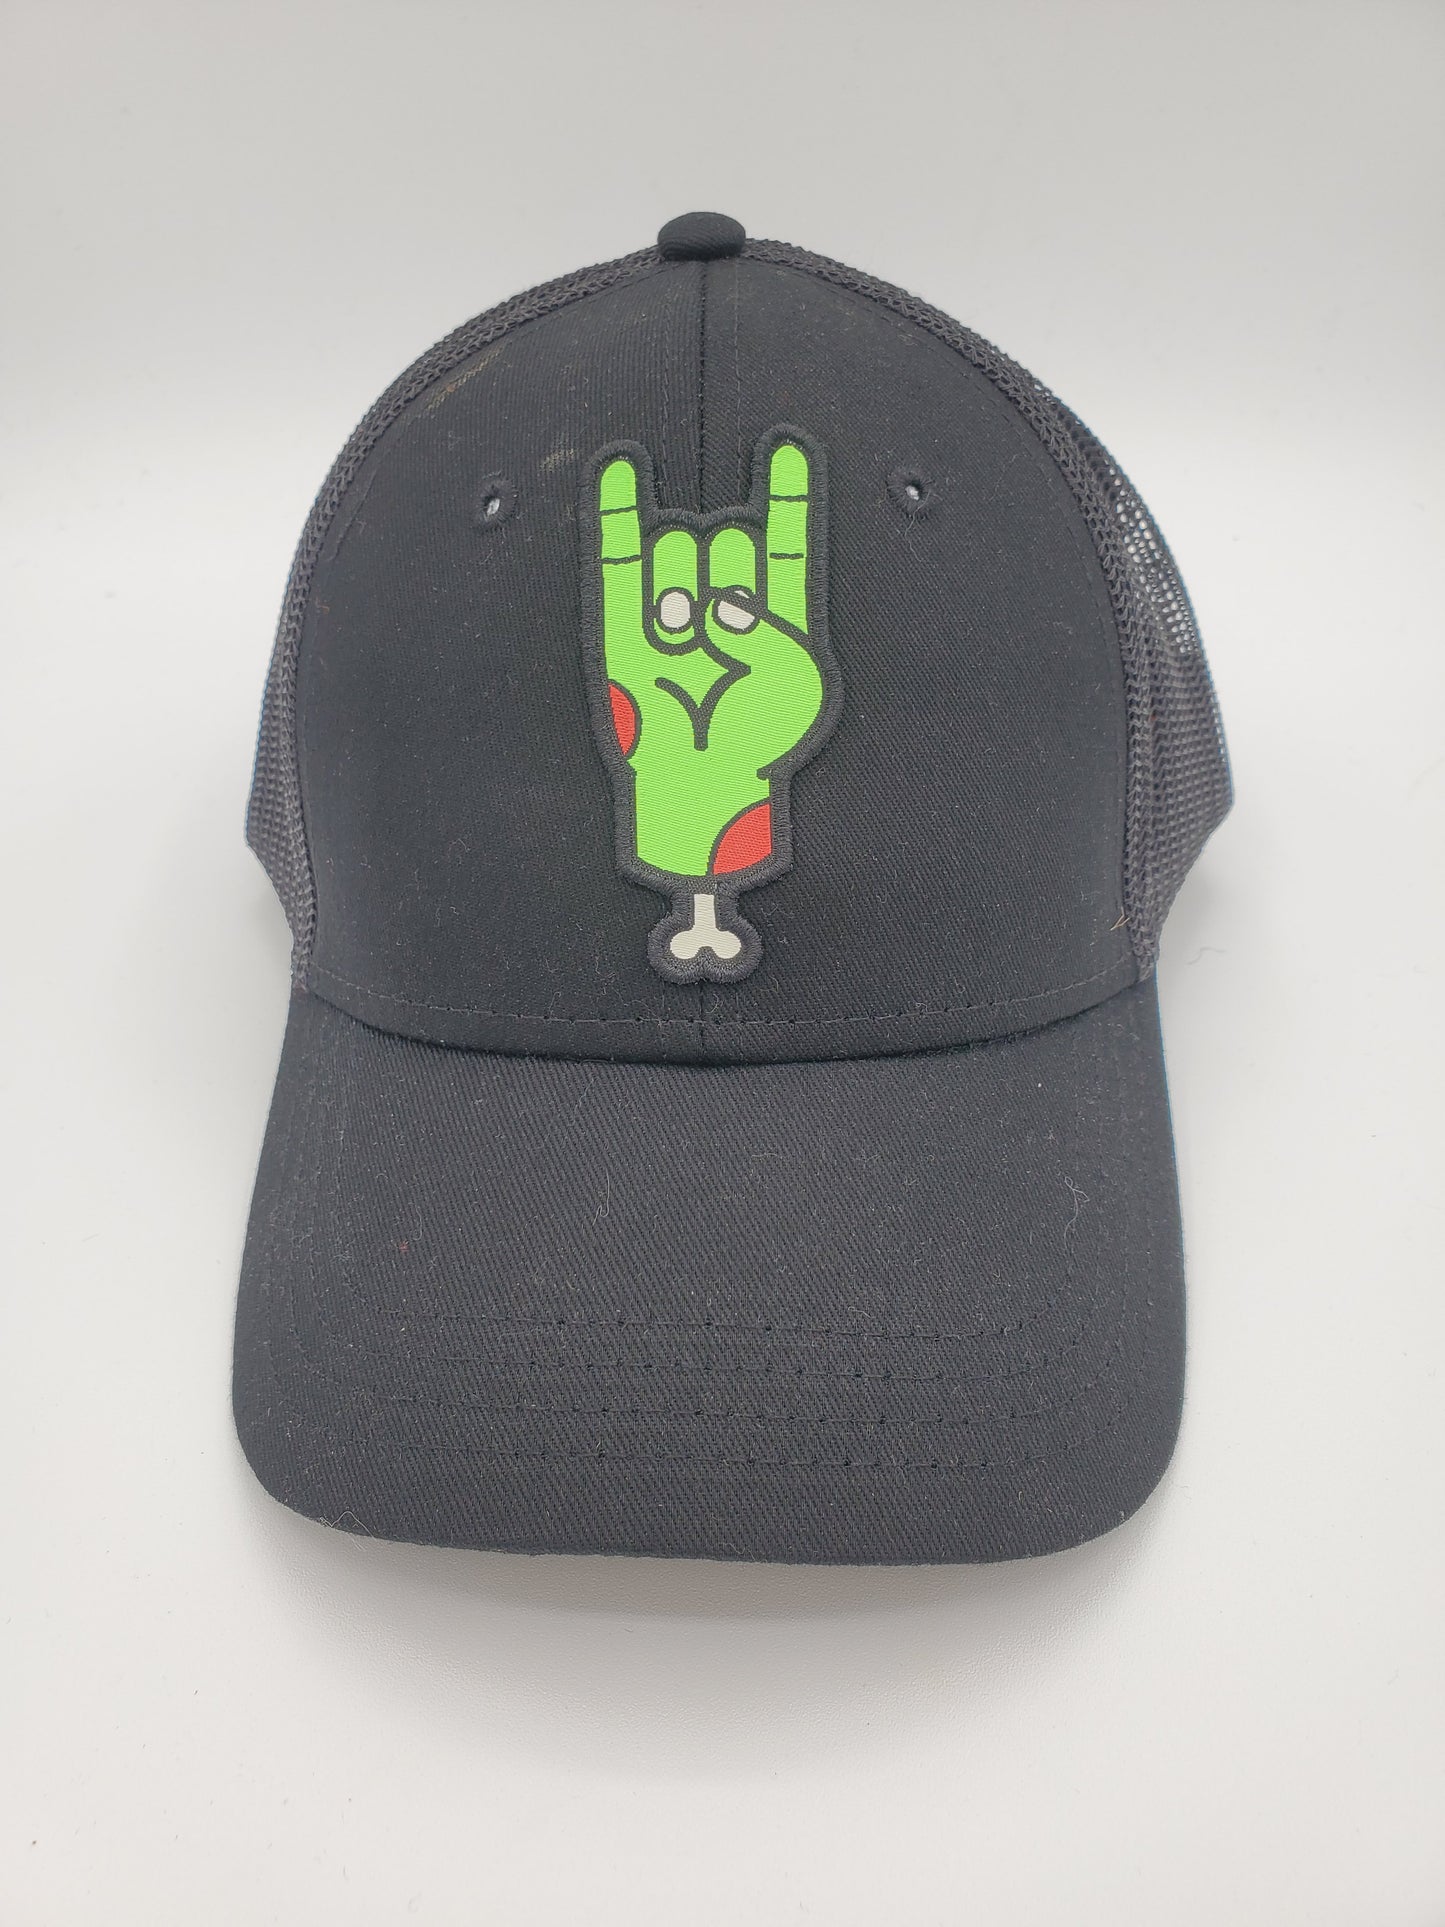 YOUTH "Zombie Rocker" Design Trucker Hat (Black Mesh/ Black Fabric)